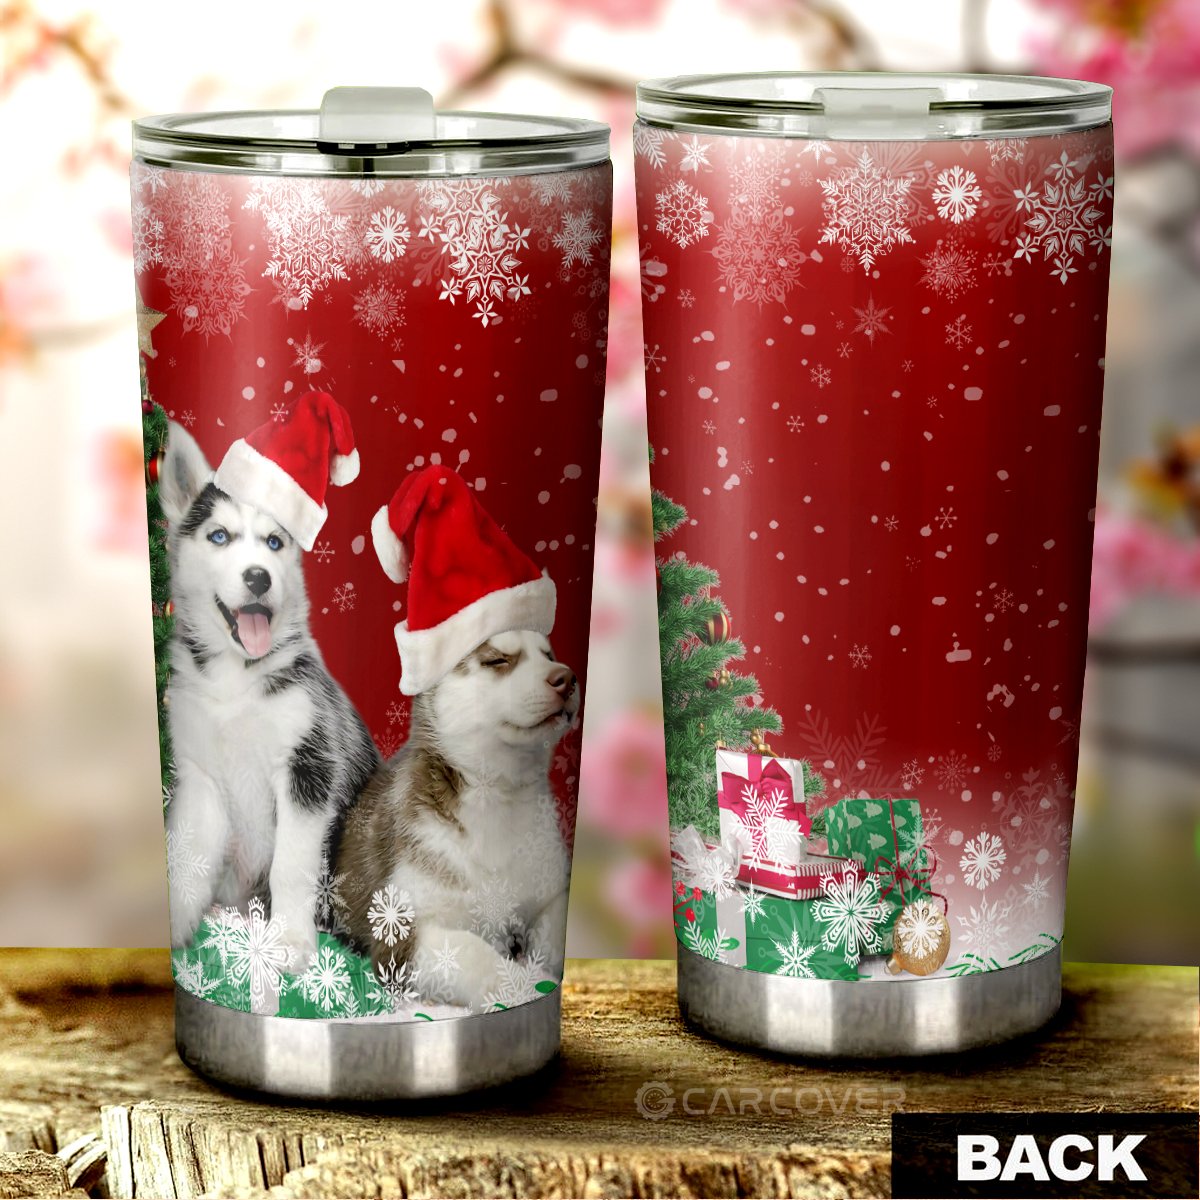 Alaskan Malamutes Tumbler Cup Custom Dog Car Accessories Christmas - Gearcarcover - 4